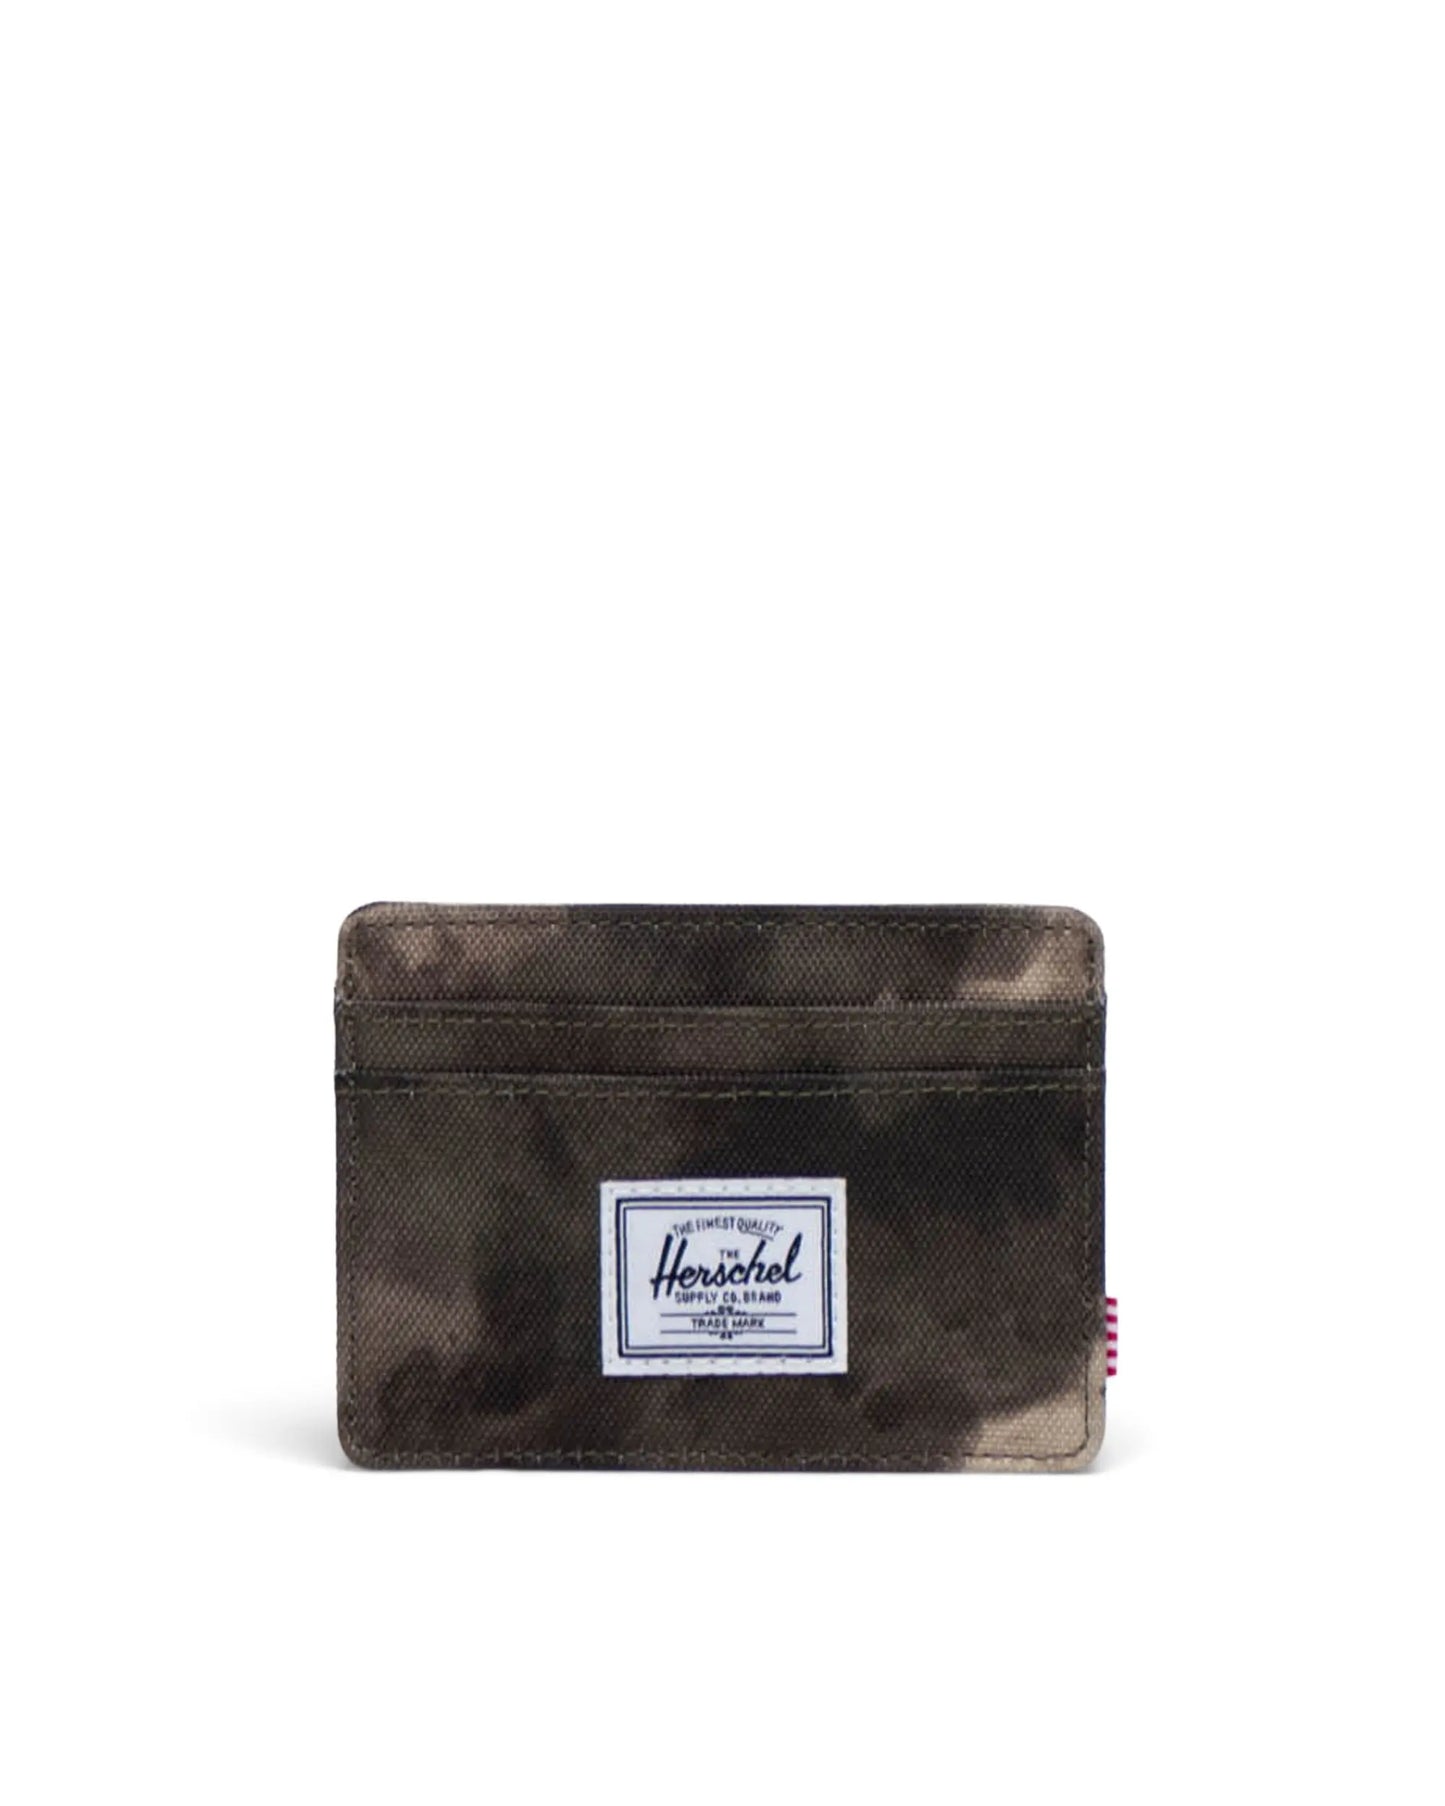 Herschel Charlie Cardholder Wallet - Painted Camo